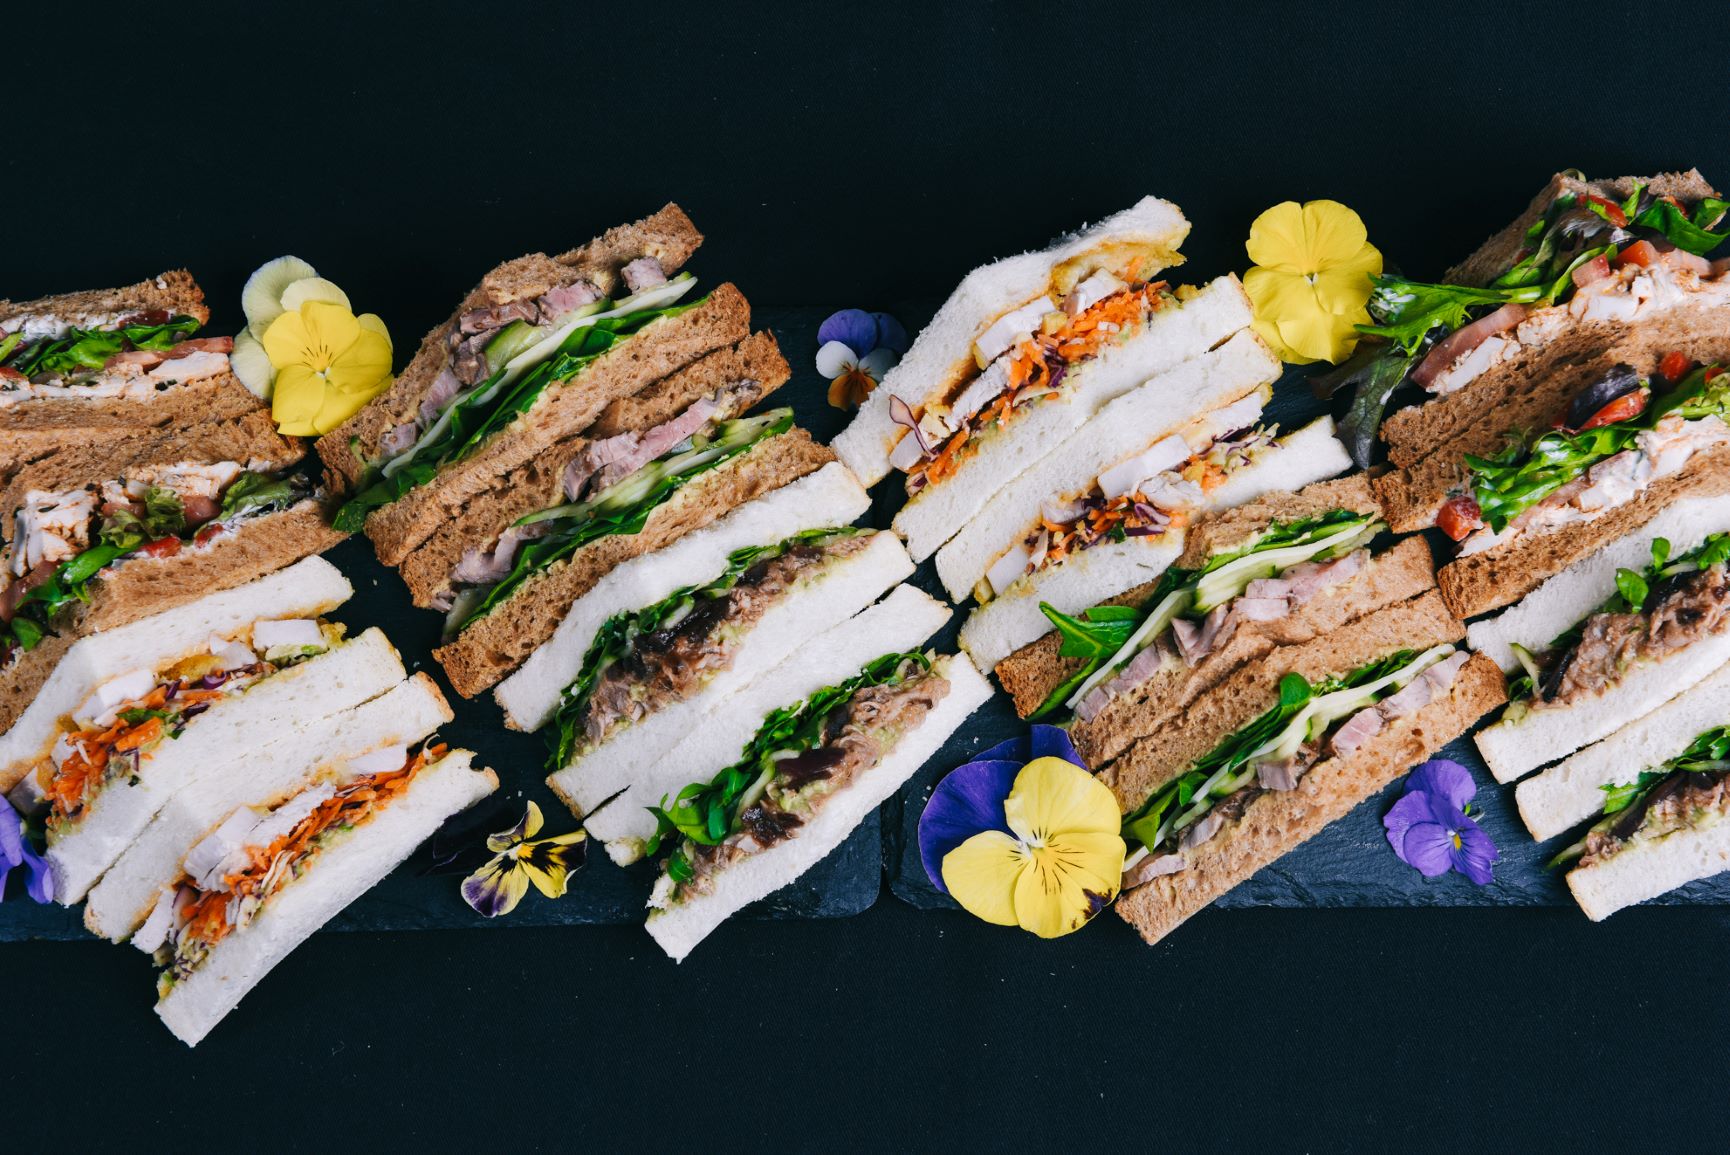 Sandwiches | Catering Sydney CBD, Order Online | Fossix